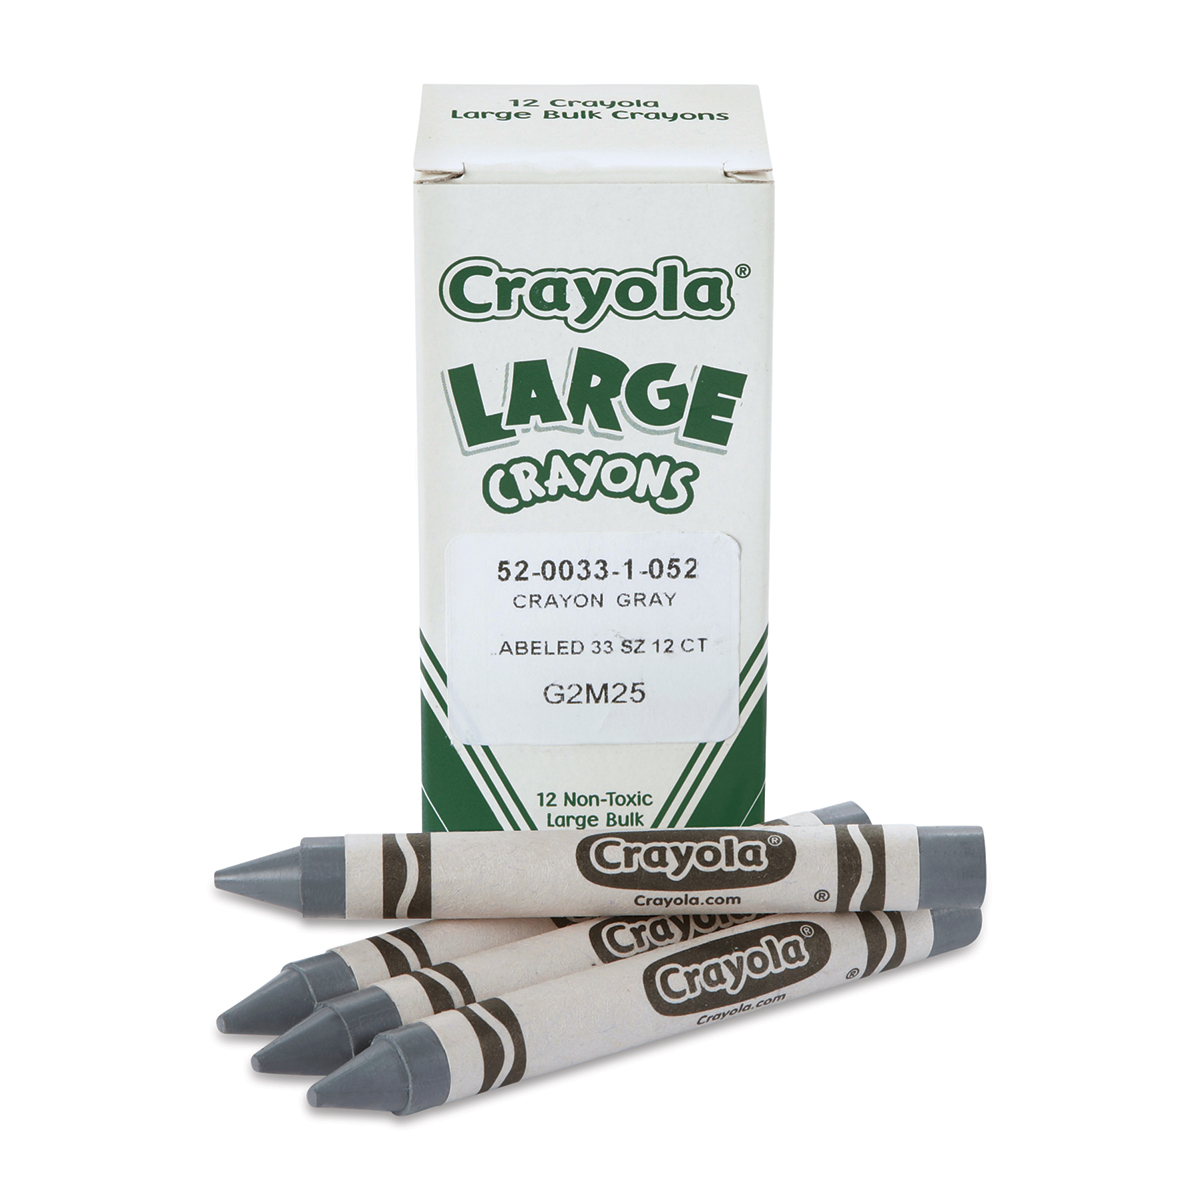 Crayola Crayons - Box of 12, Red